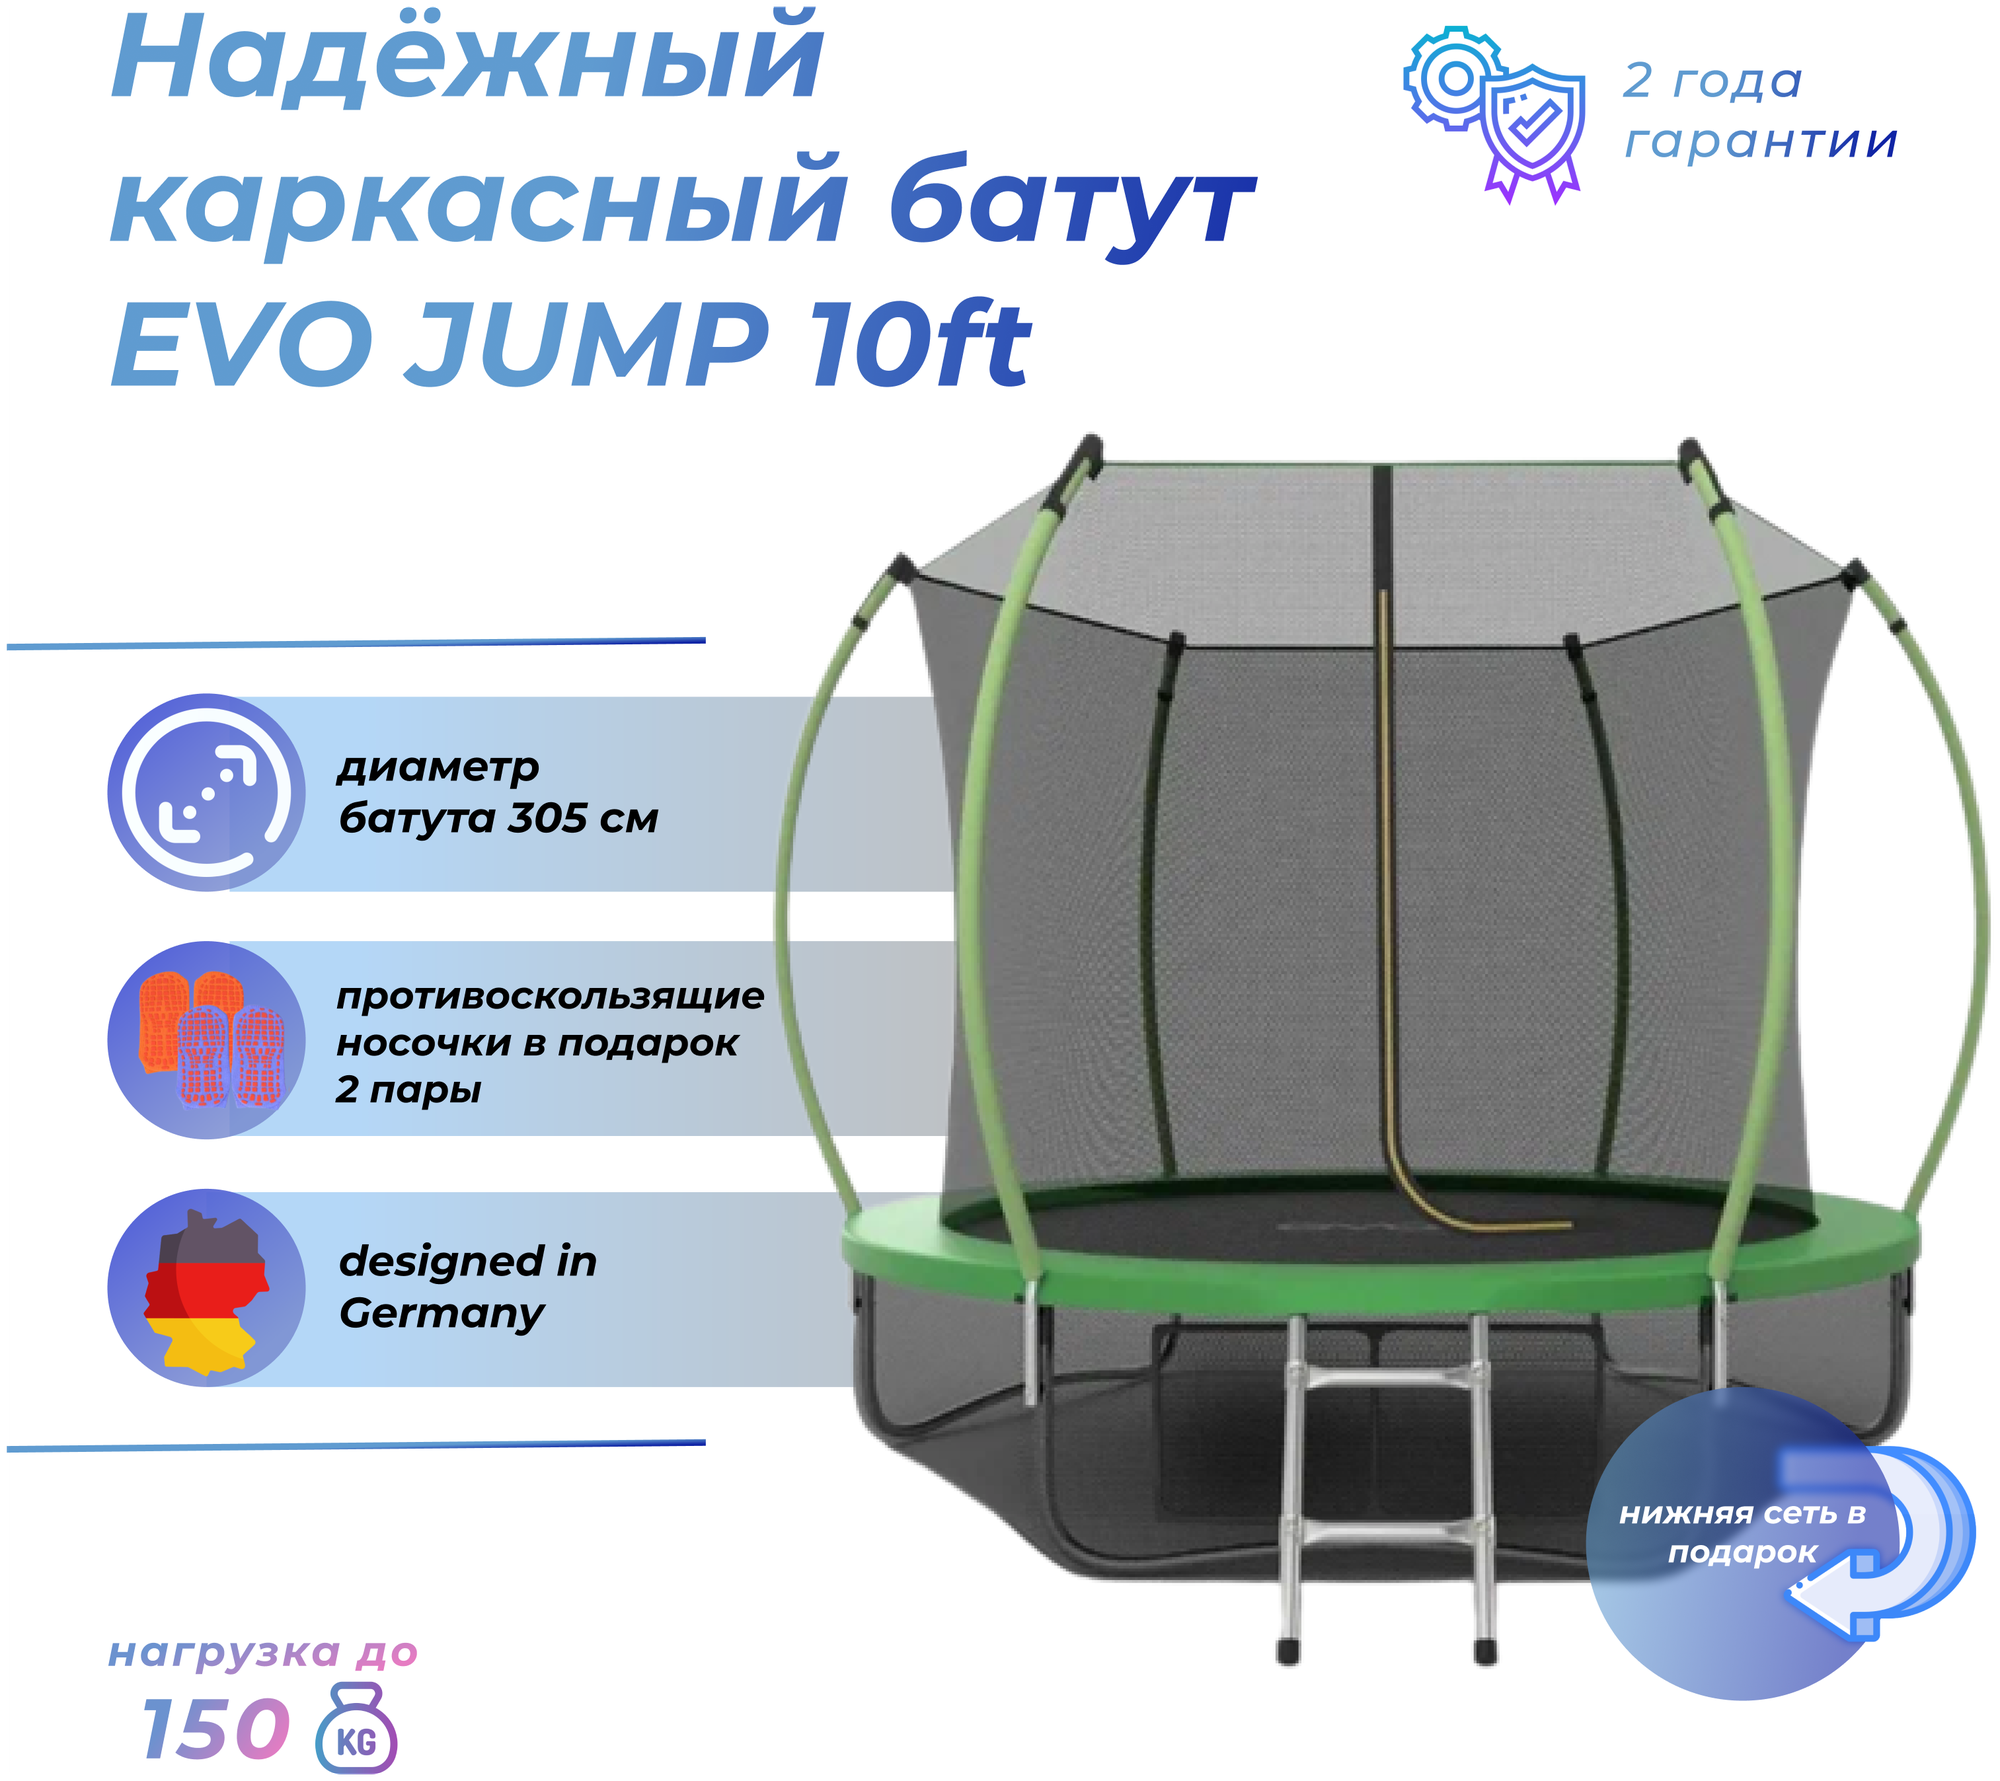  EVO Jump Internal 10ft (Green)      +  